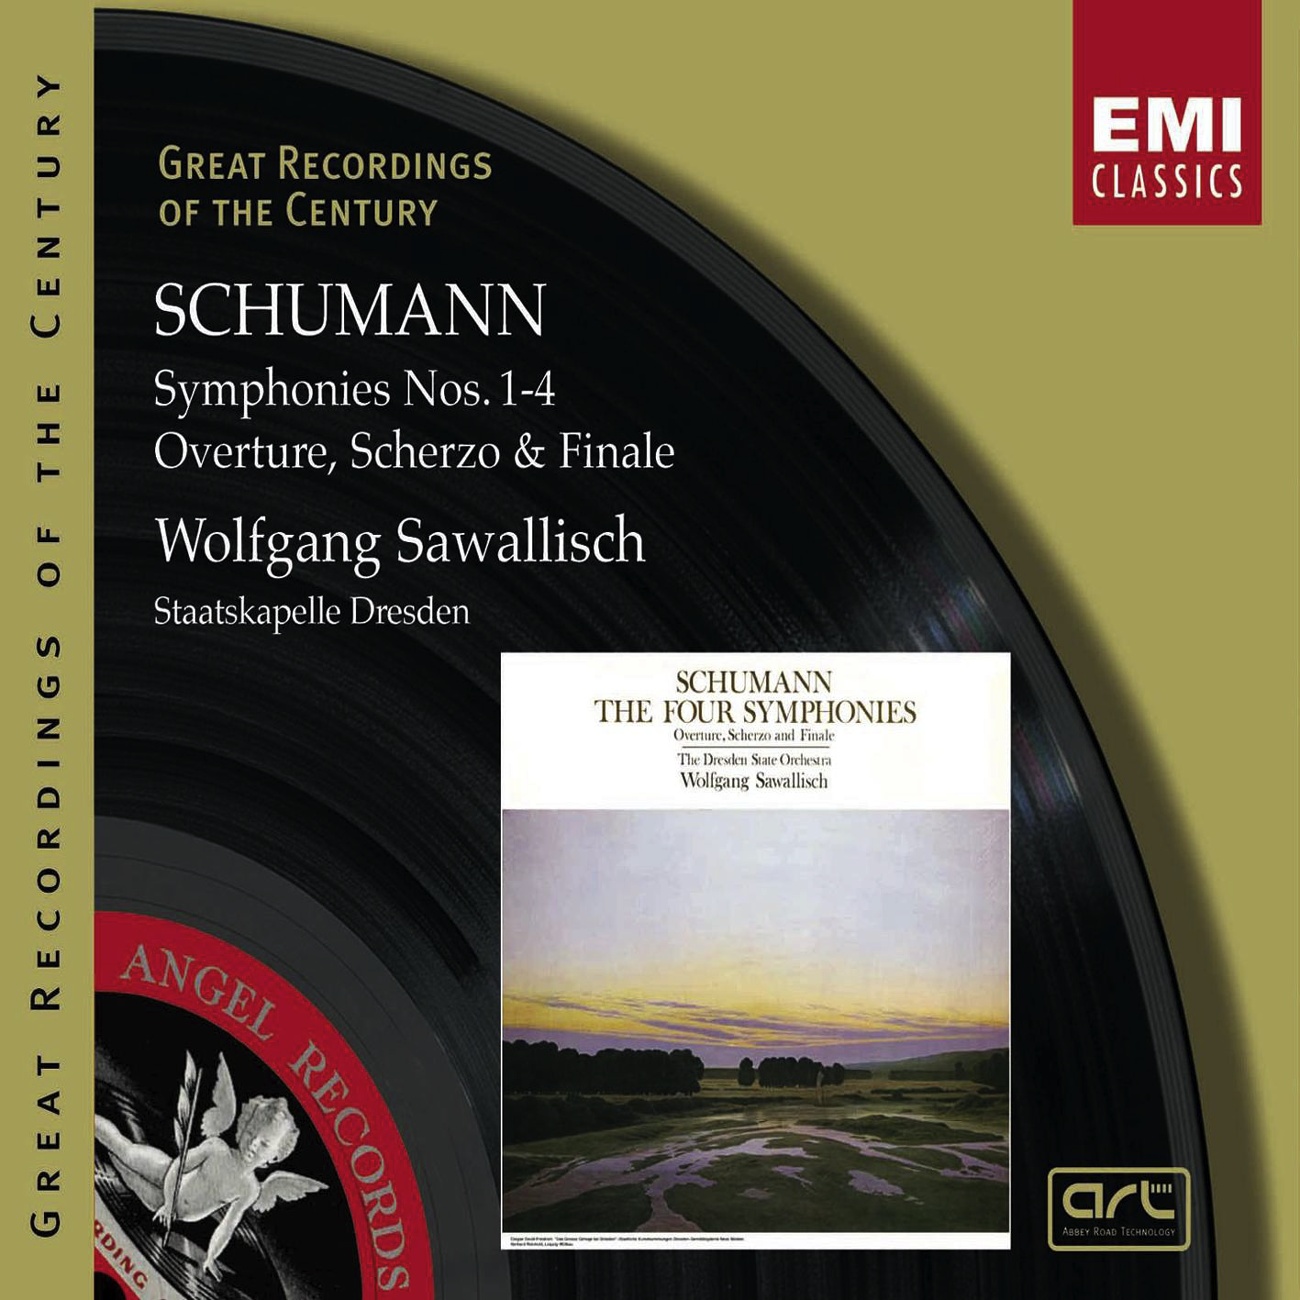 Symphony No. 3 in E flat major Op. 97 Rhenish (2001 Digital Remaster): III.     Nicht schnell